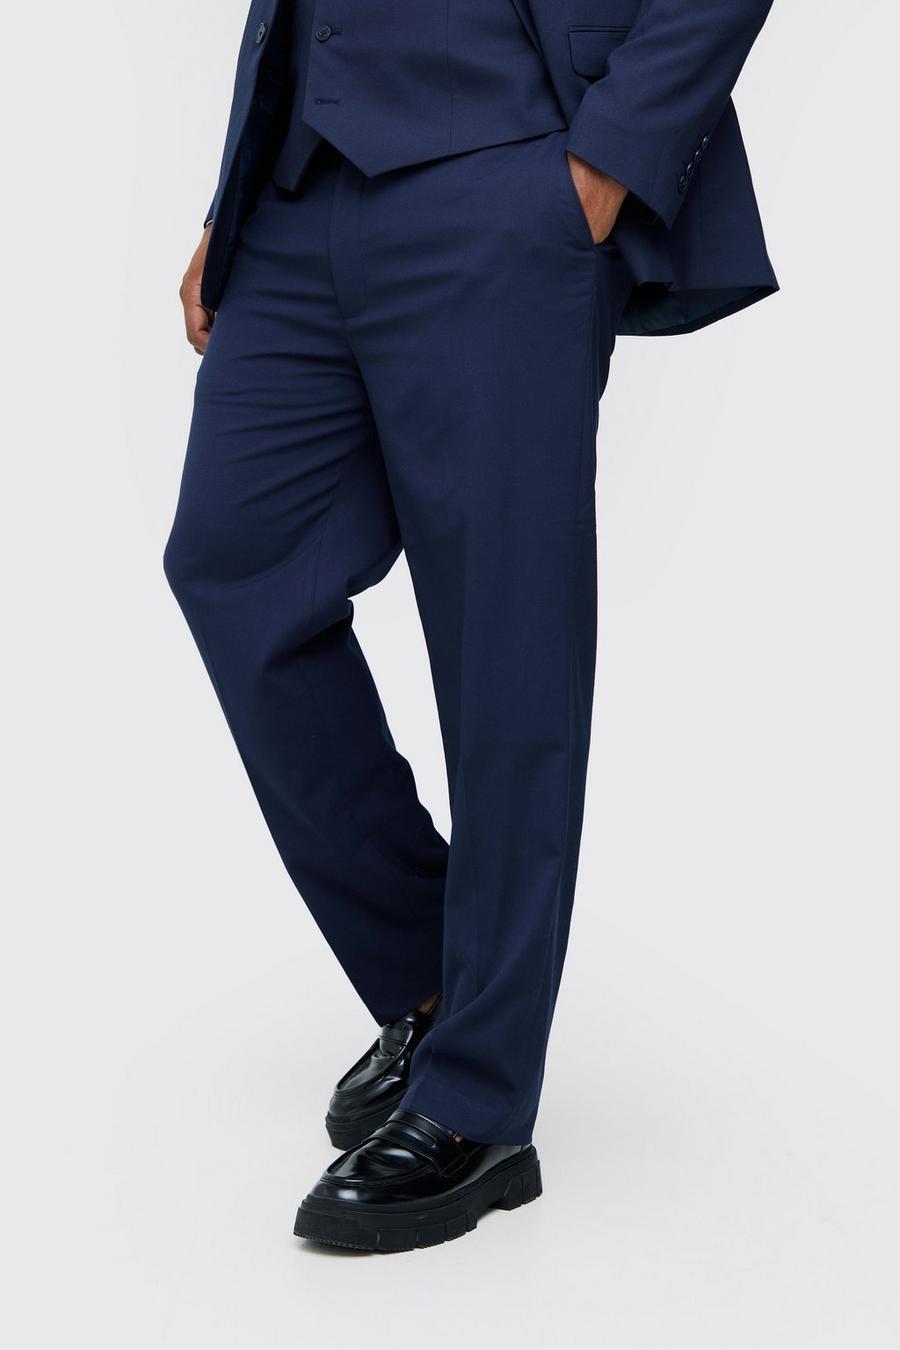 Pantalón Plus básico de traje Regular azul marino, Navy